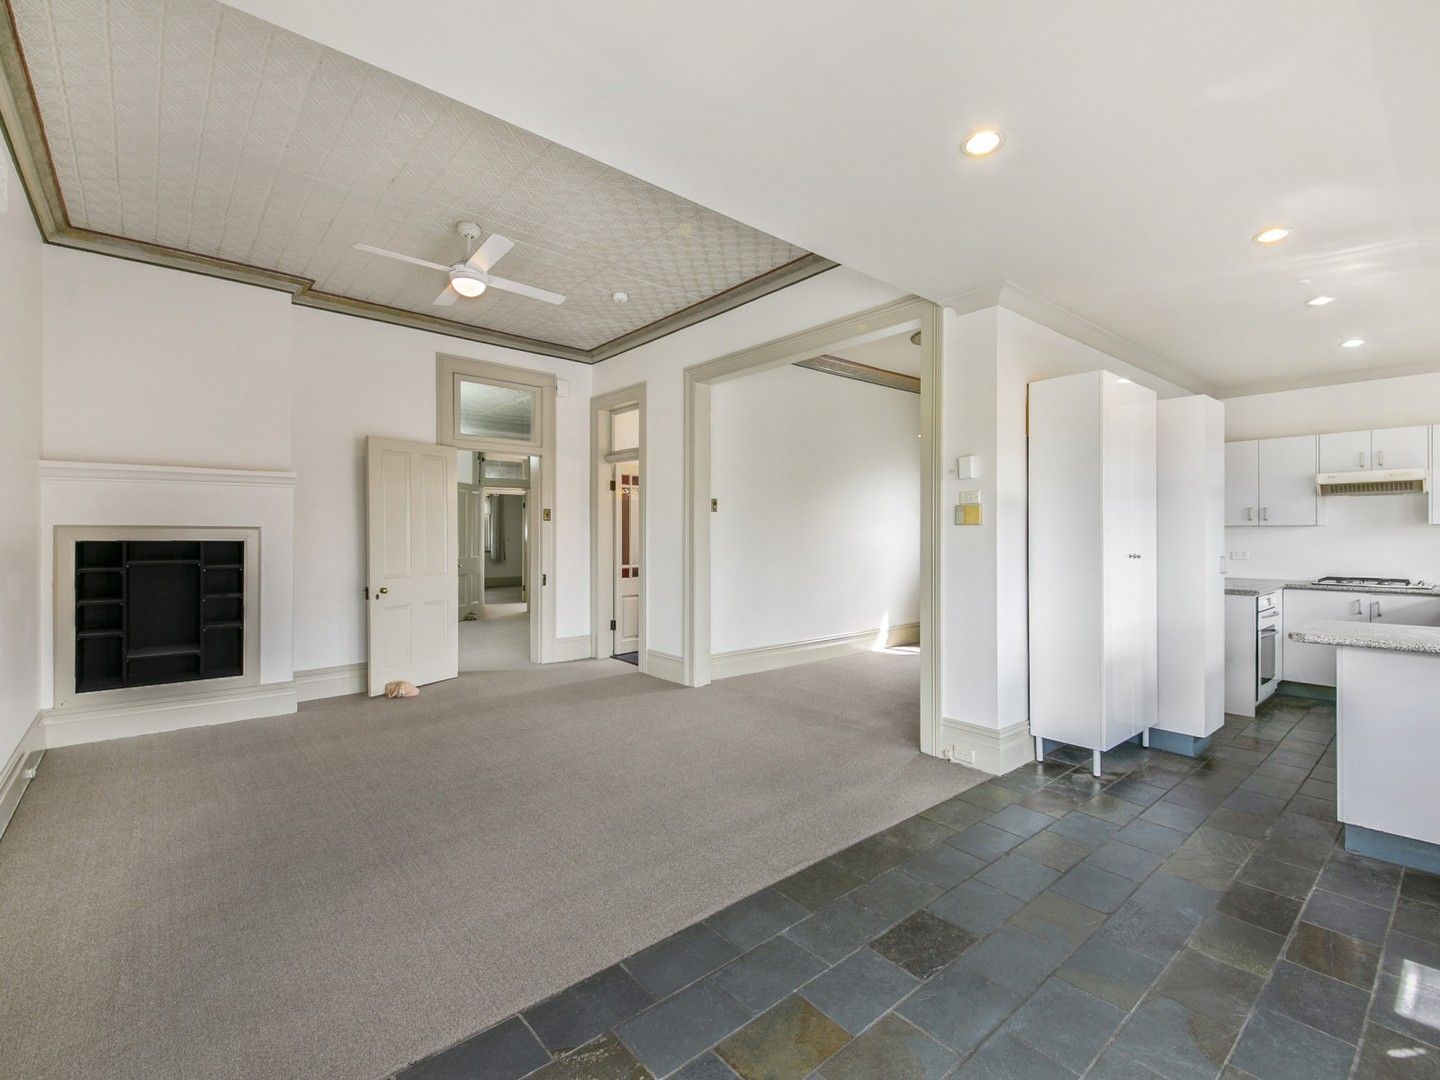 2 bedrooms House in 94 Renwick Street DRUMMOYNE NSW, 2047